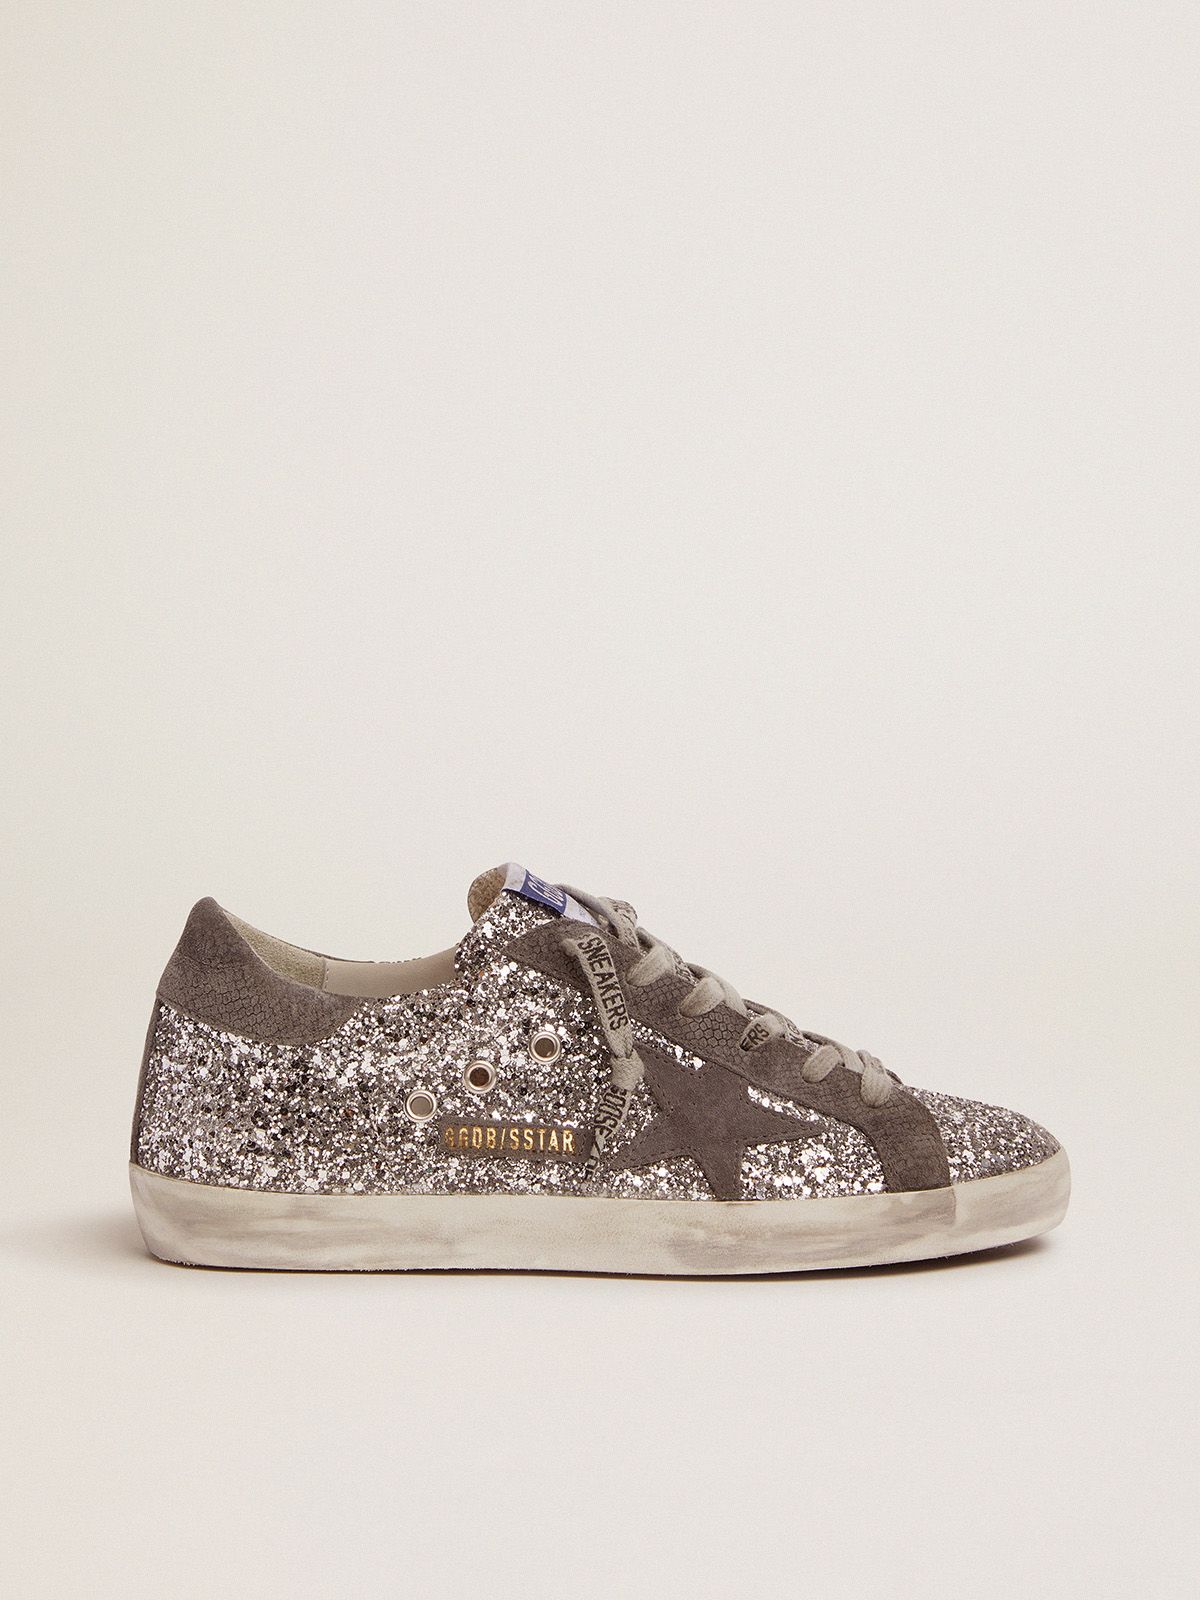 Sneakers Uomo Golden Goose Super-Star sneakers in silver glitter and dark gray suede